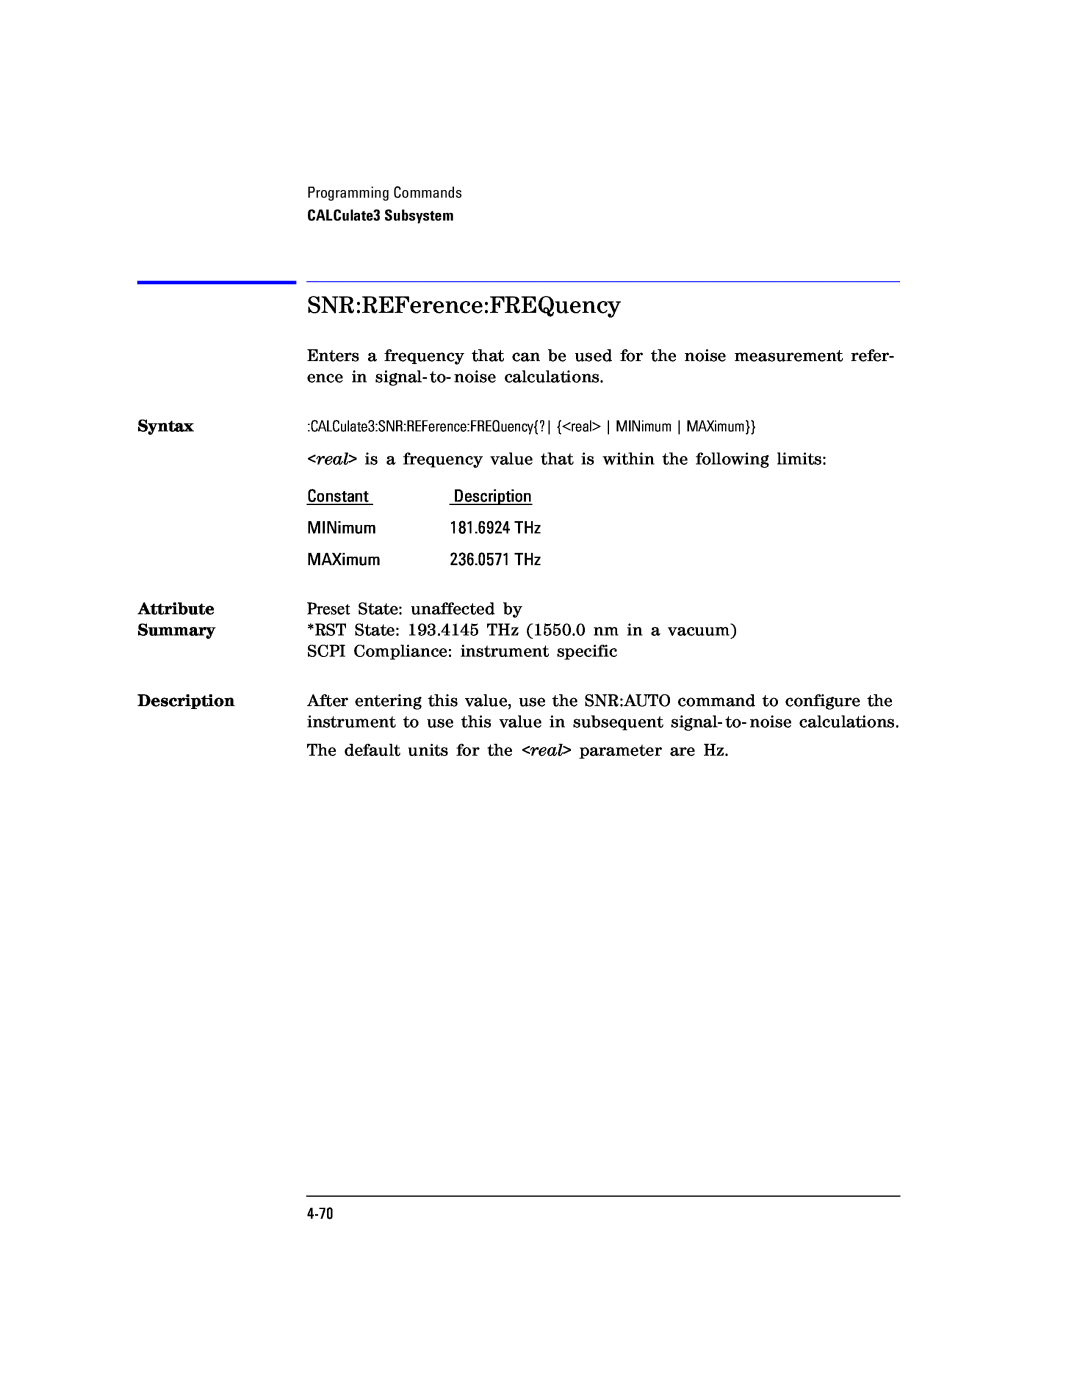 Agilent Technologies Agilent 86120C manual SNRREFerenceFREQuency, Syntax, Attribute, Summary, Description 